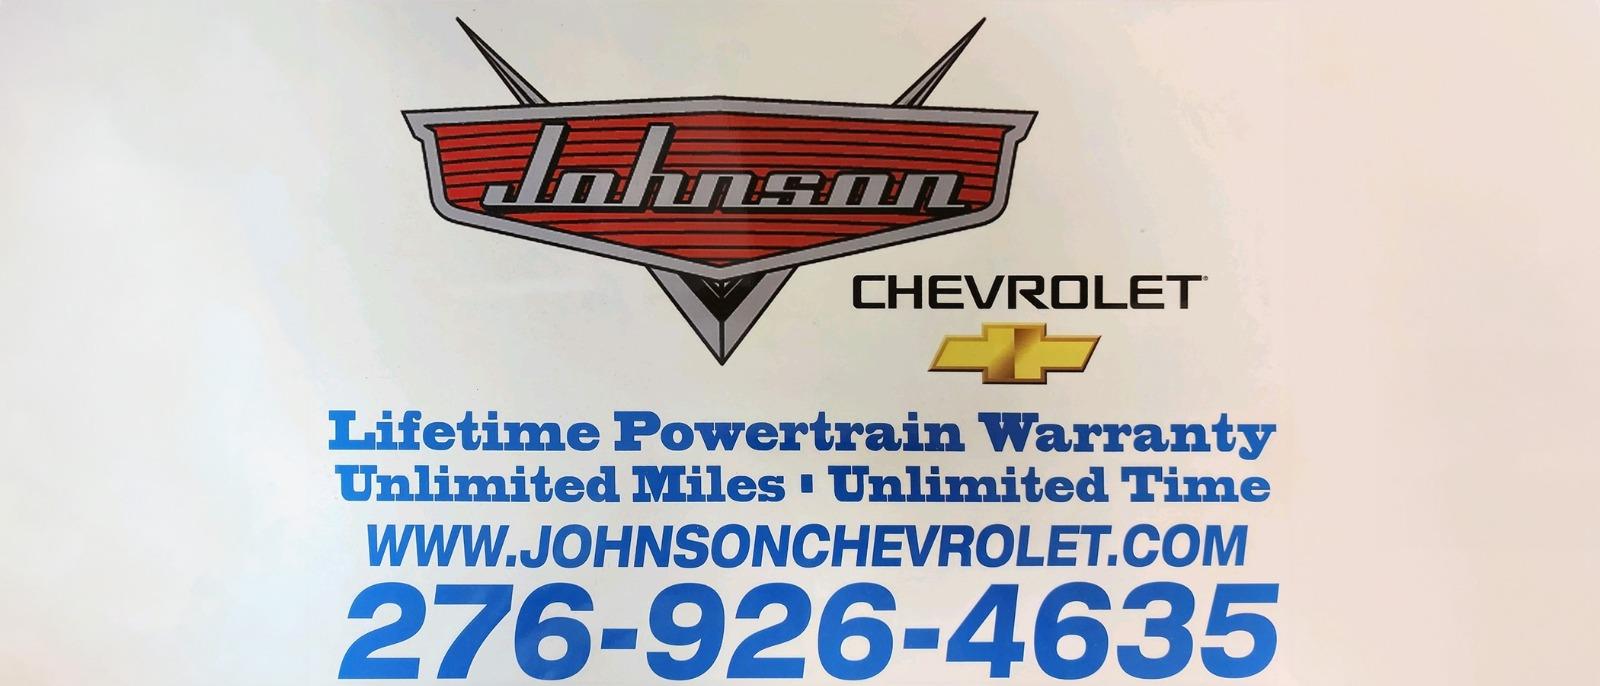 Lifetime Powertrain Warranty
Unlimited Miles. Unlimited Time
www.johnsonchevrolet.com
276-926-4635